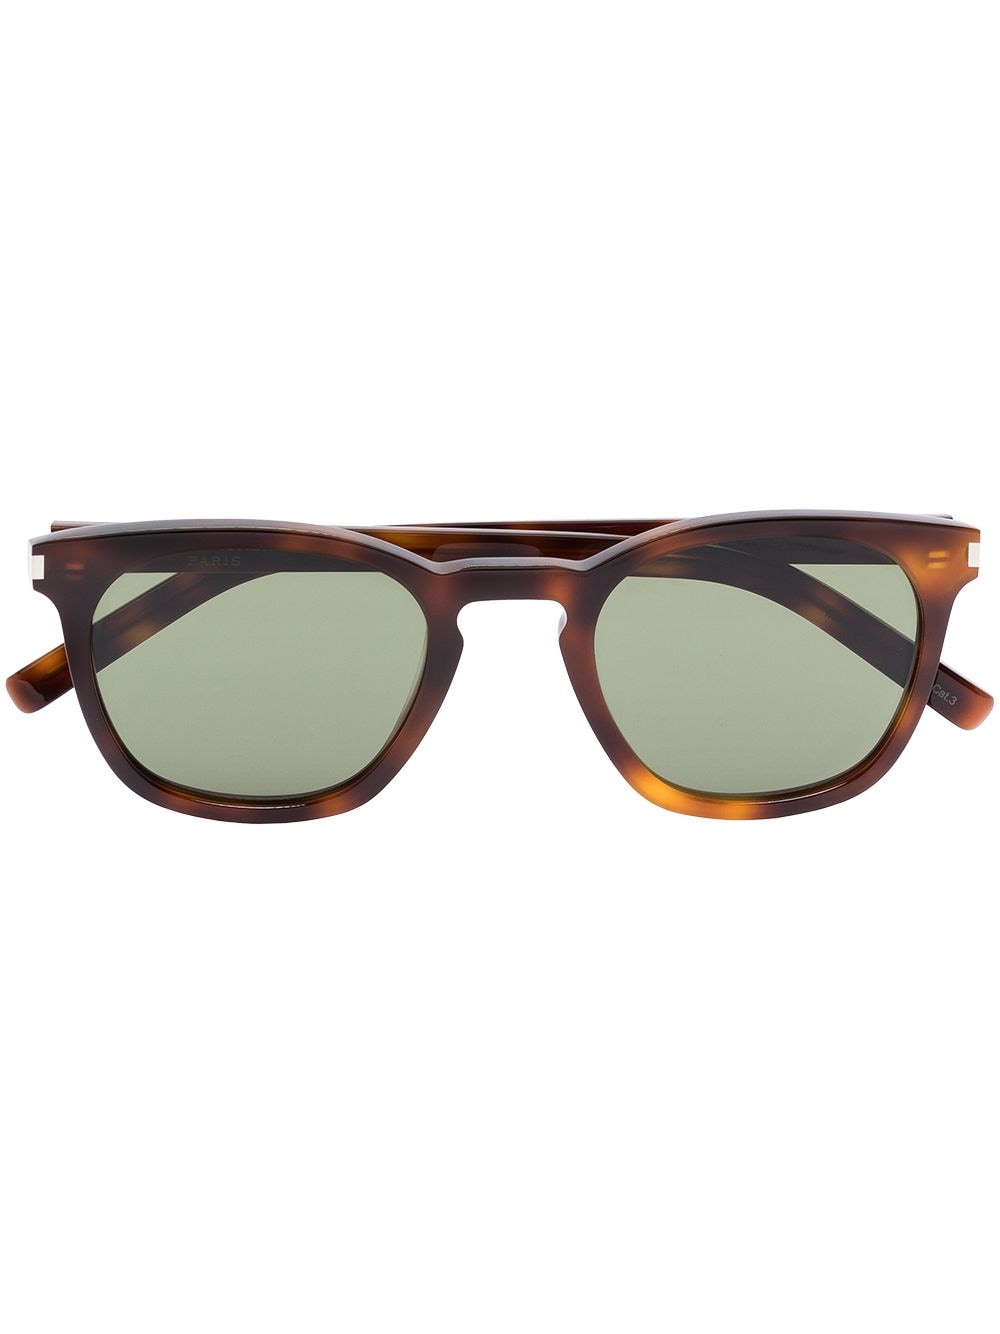 Saint Laurent Eyewear square-frame tortoiseshell sunglasses - Brown von Saint Laurent Eyewear